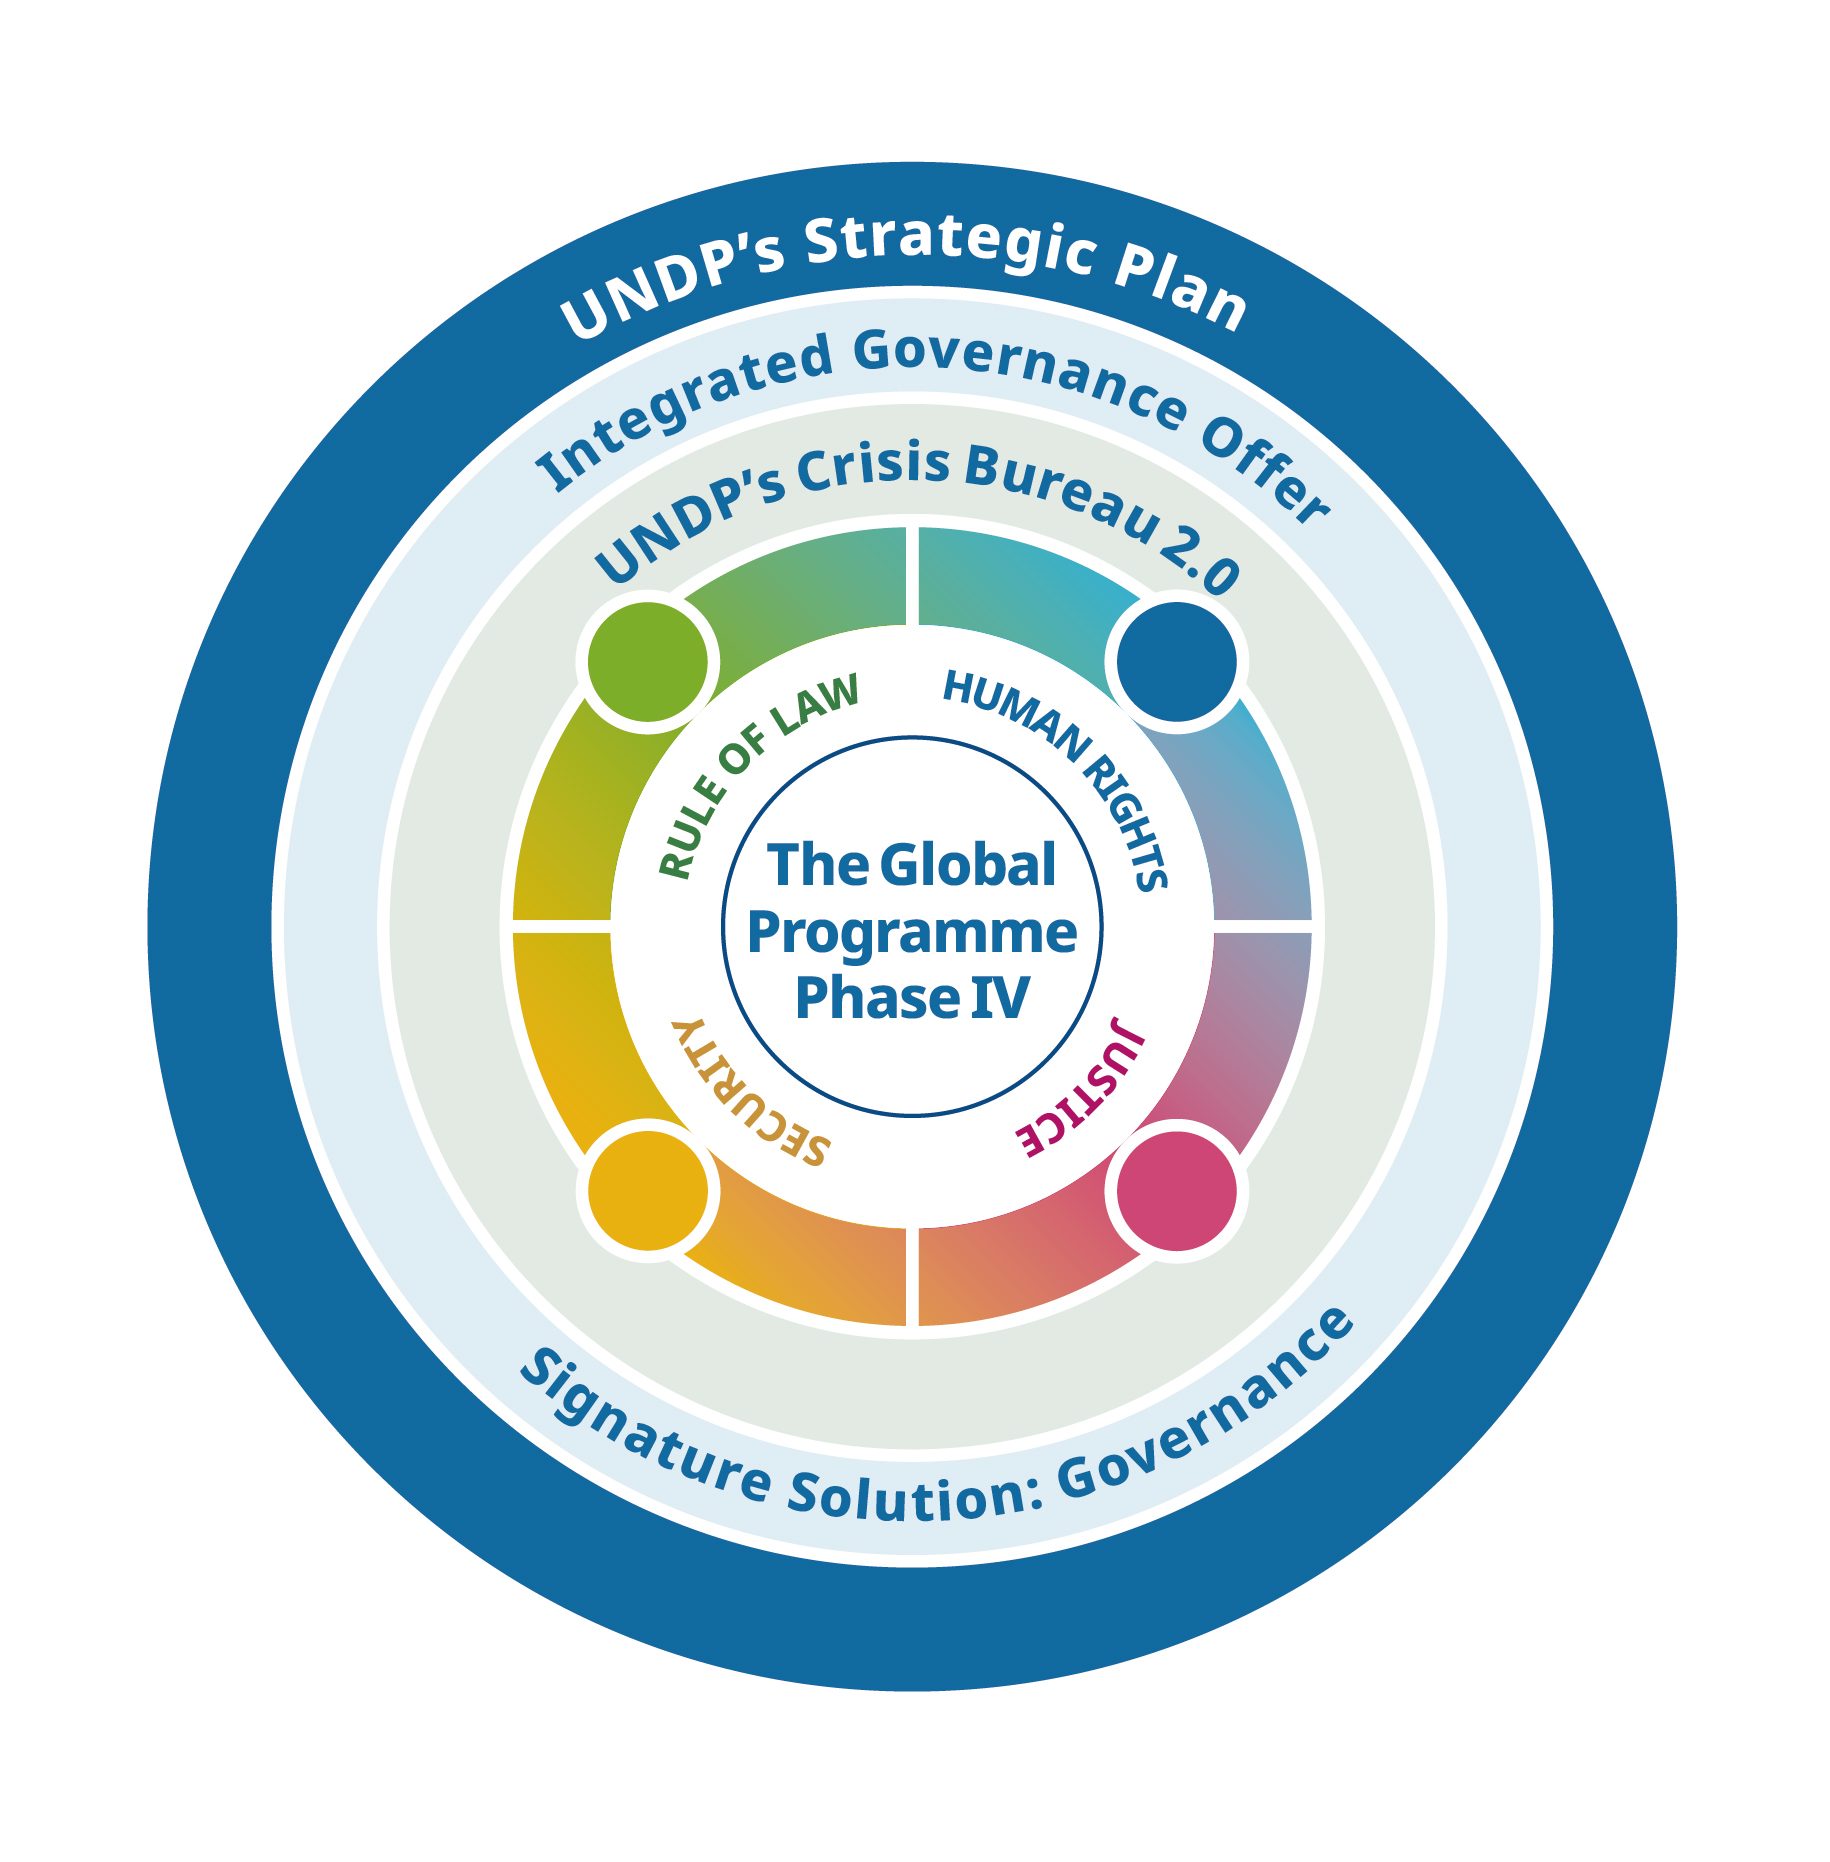 UNDP's Strategic Plan Integrated Governance Offer UNDP's Crisis Bureau 2.0 The Global Programme Phase IV